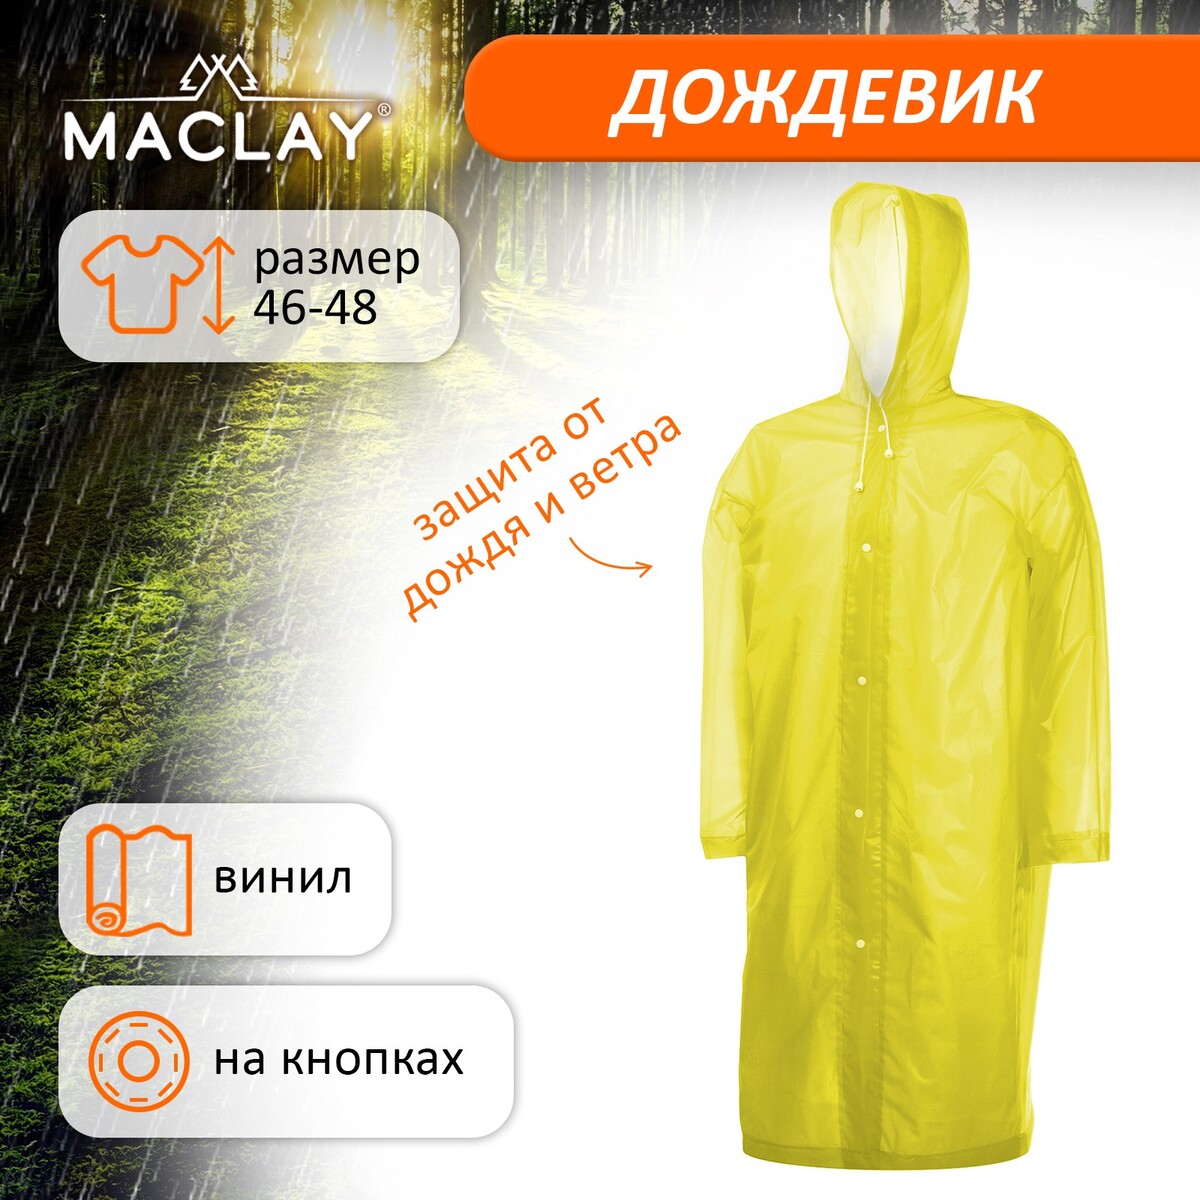 Дождевик-плащ maclay, р. 46-48, цвет желтый Maclay